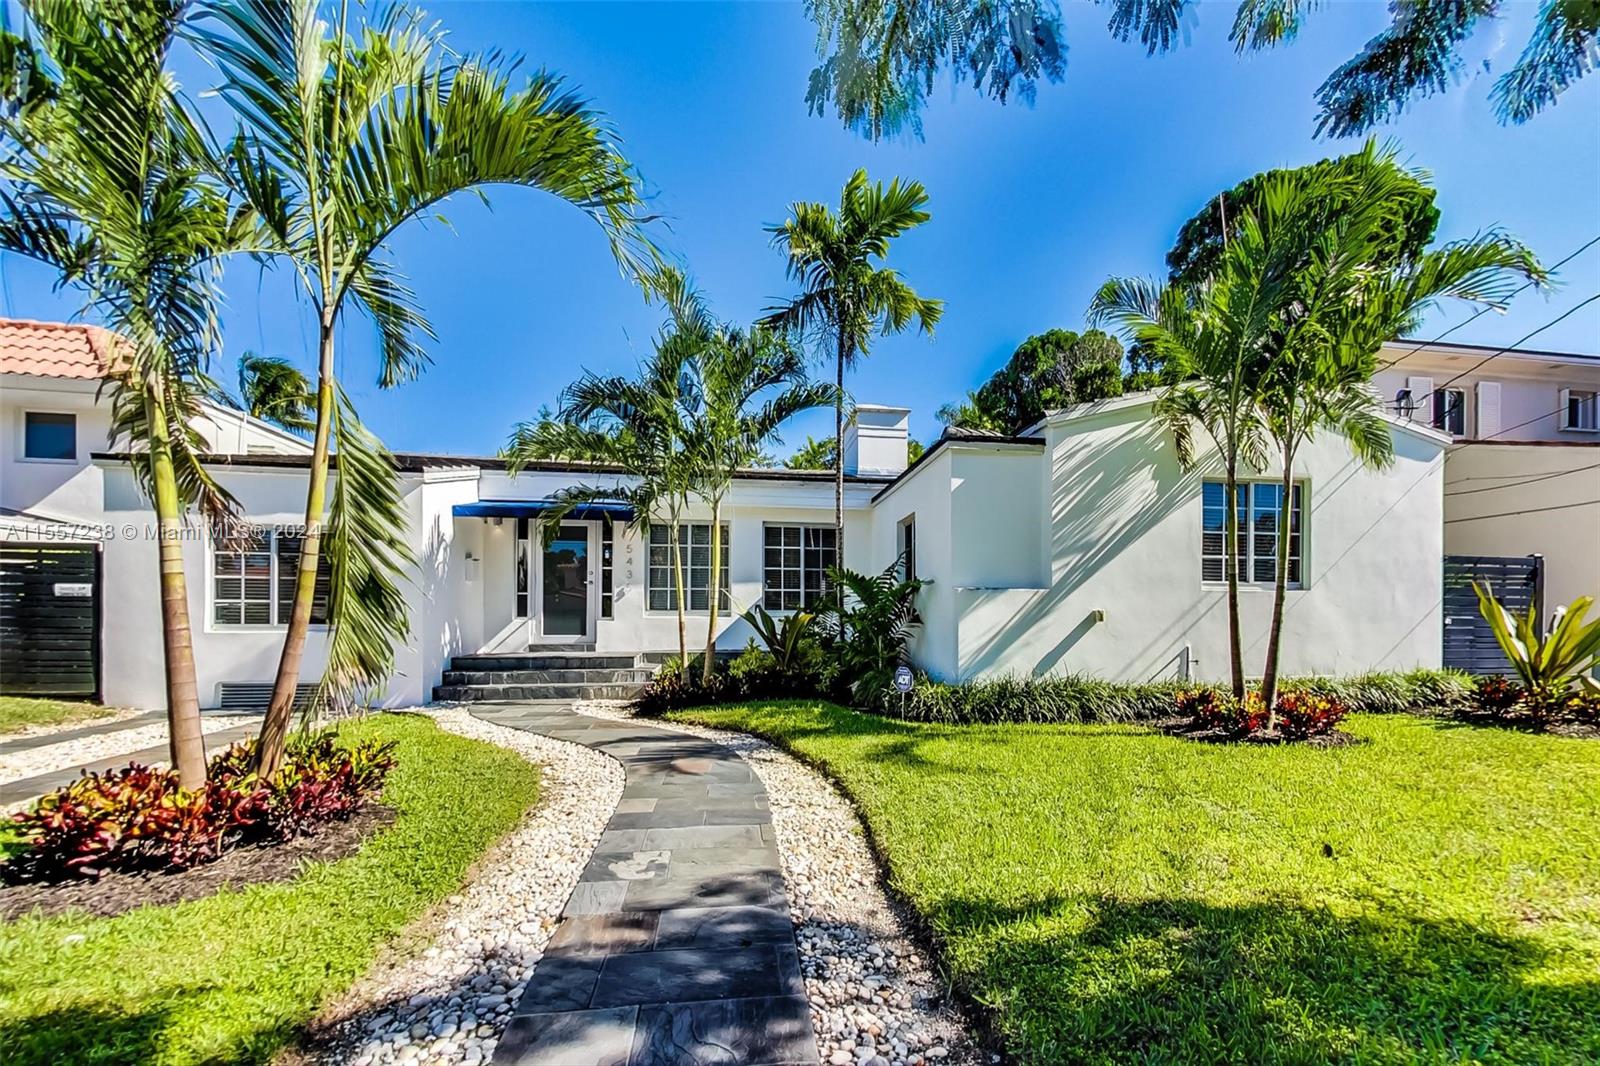 Property for Sale at 5435 La Gorce Dr, Miami Beach, Miami-Dade County, Florida - Bedrooms: 3 
Bathrooms: 3  - $2,450,000